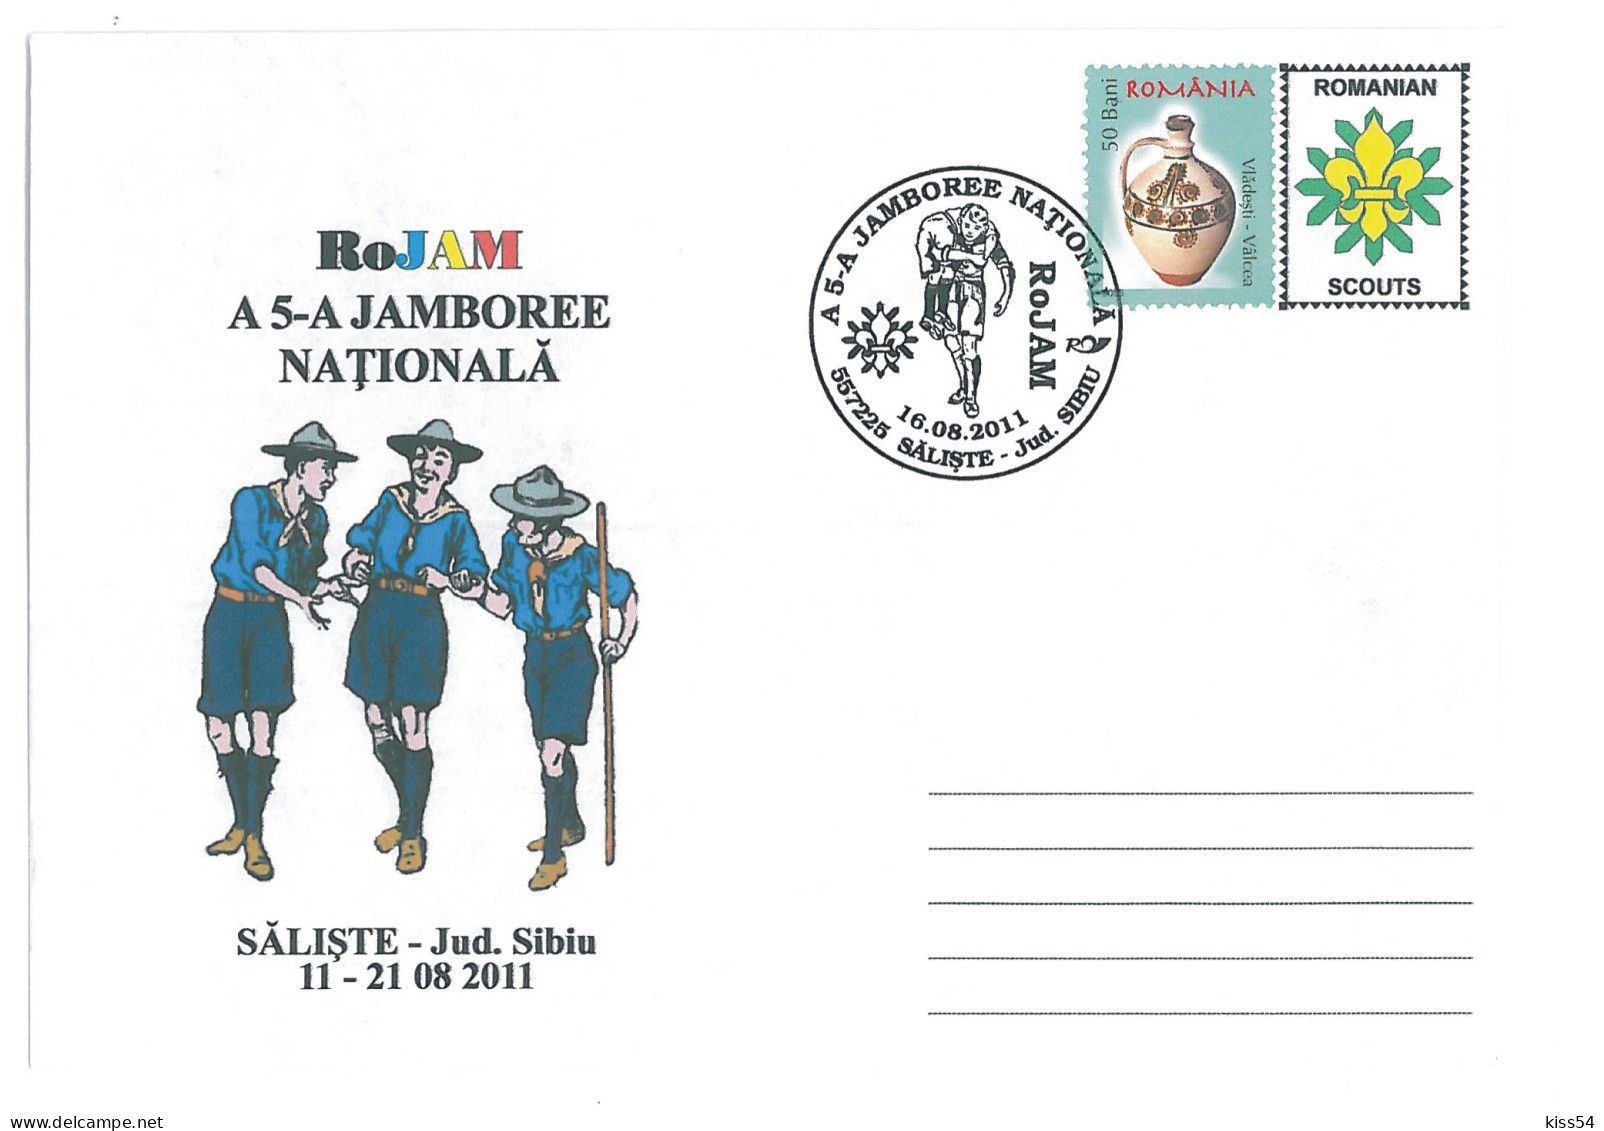 SC 47 - 1303 ROMANIA, National JAMBOREE, Scout - Cover - Used - 2011 - Storia Postale